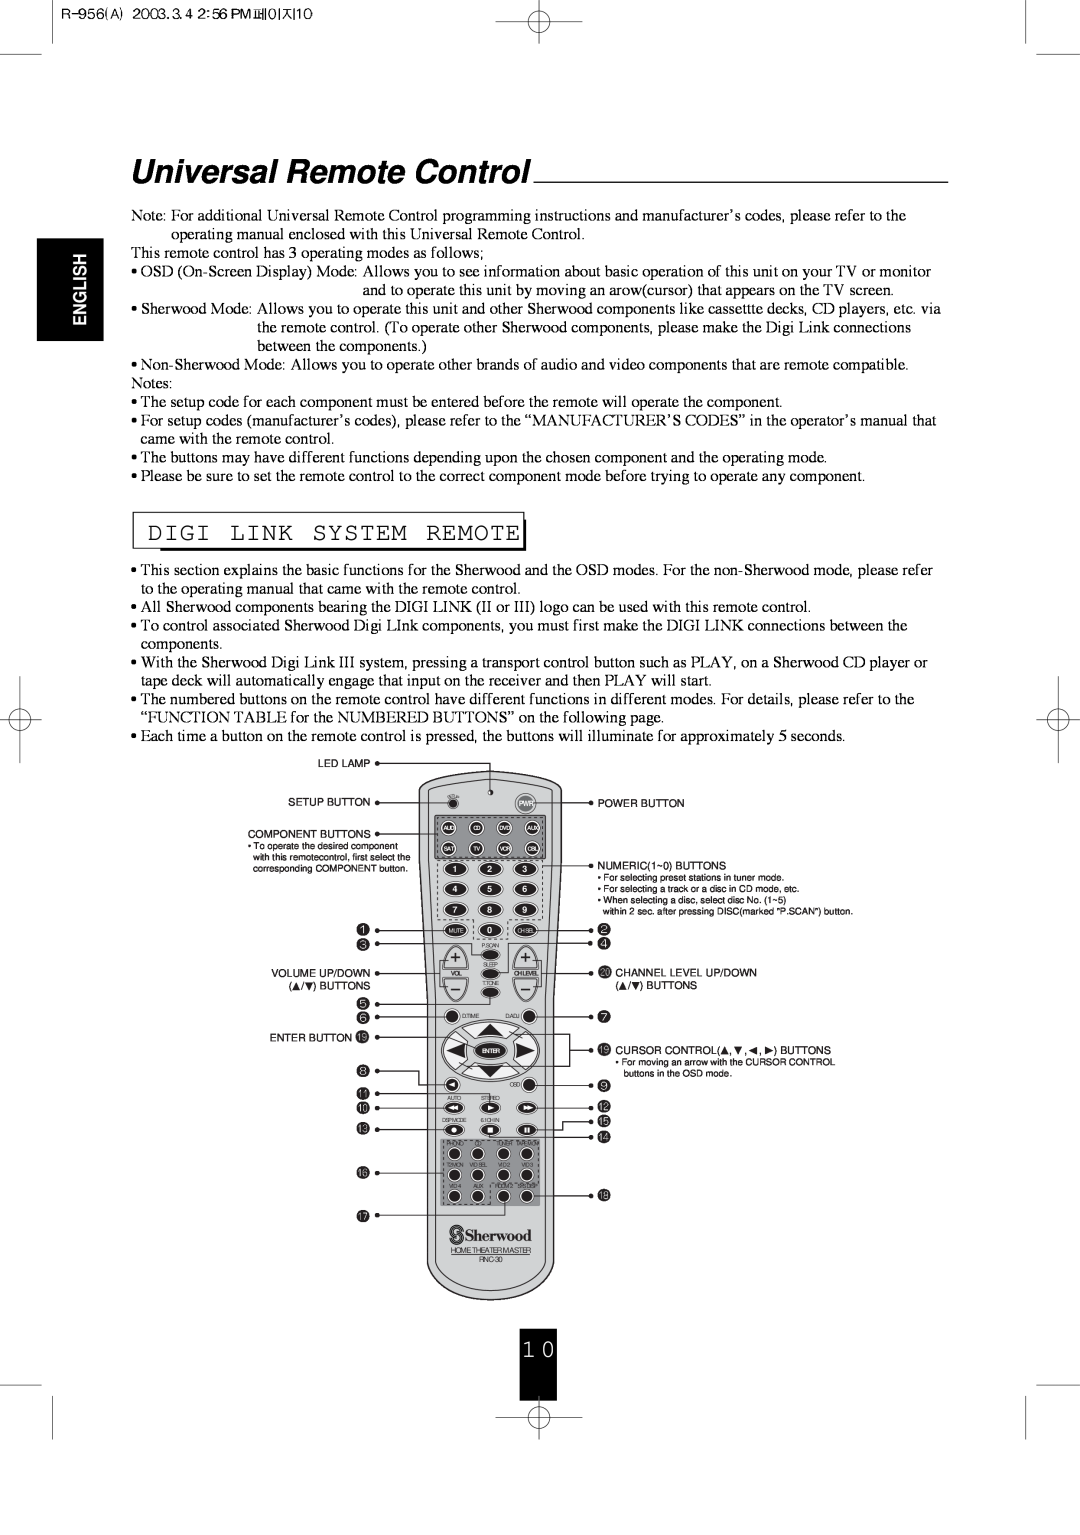 Sherwood R-956 manual Universal Remote Control, Digi Link System Remote, English 